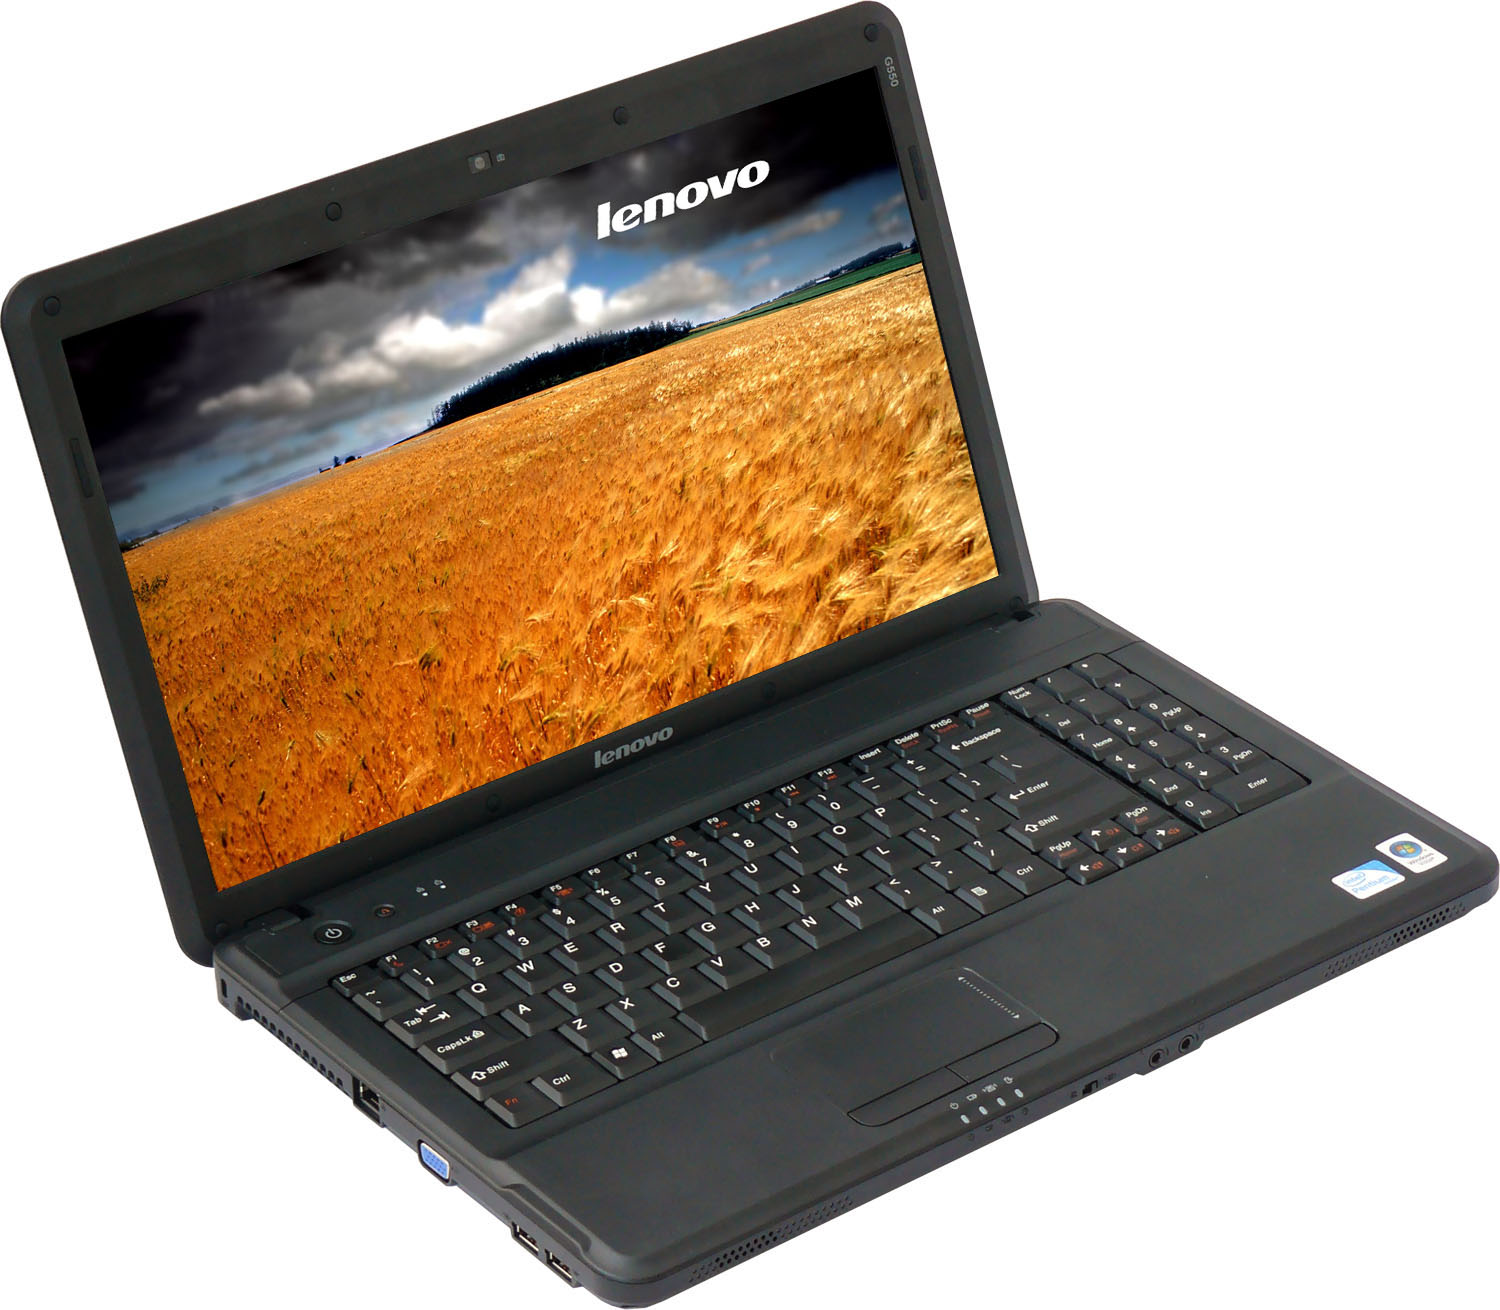 Lenovo G550 - notebook za cenu netbooku